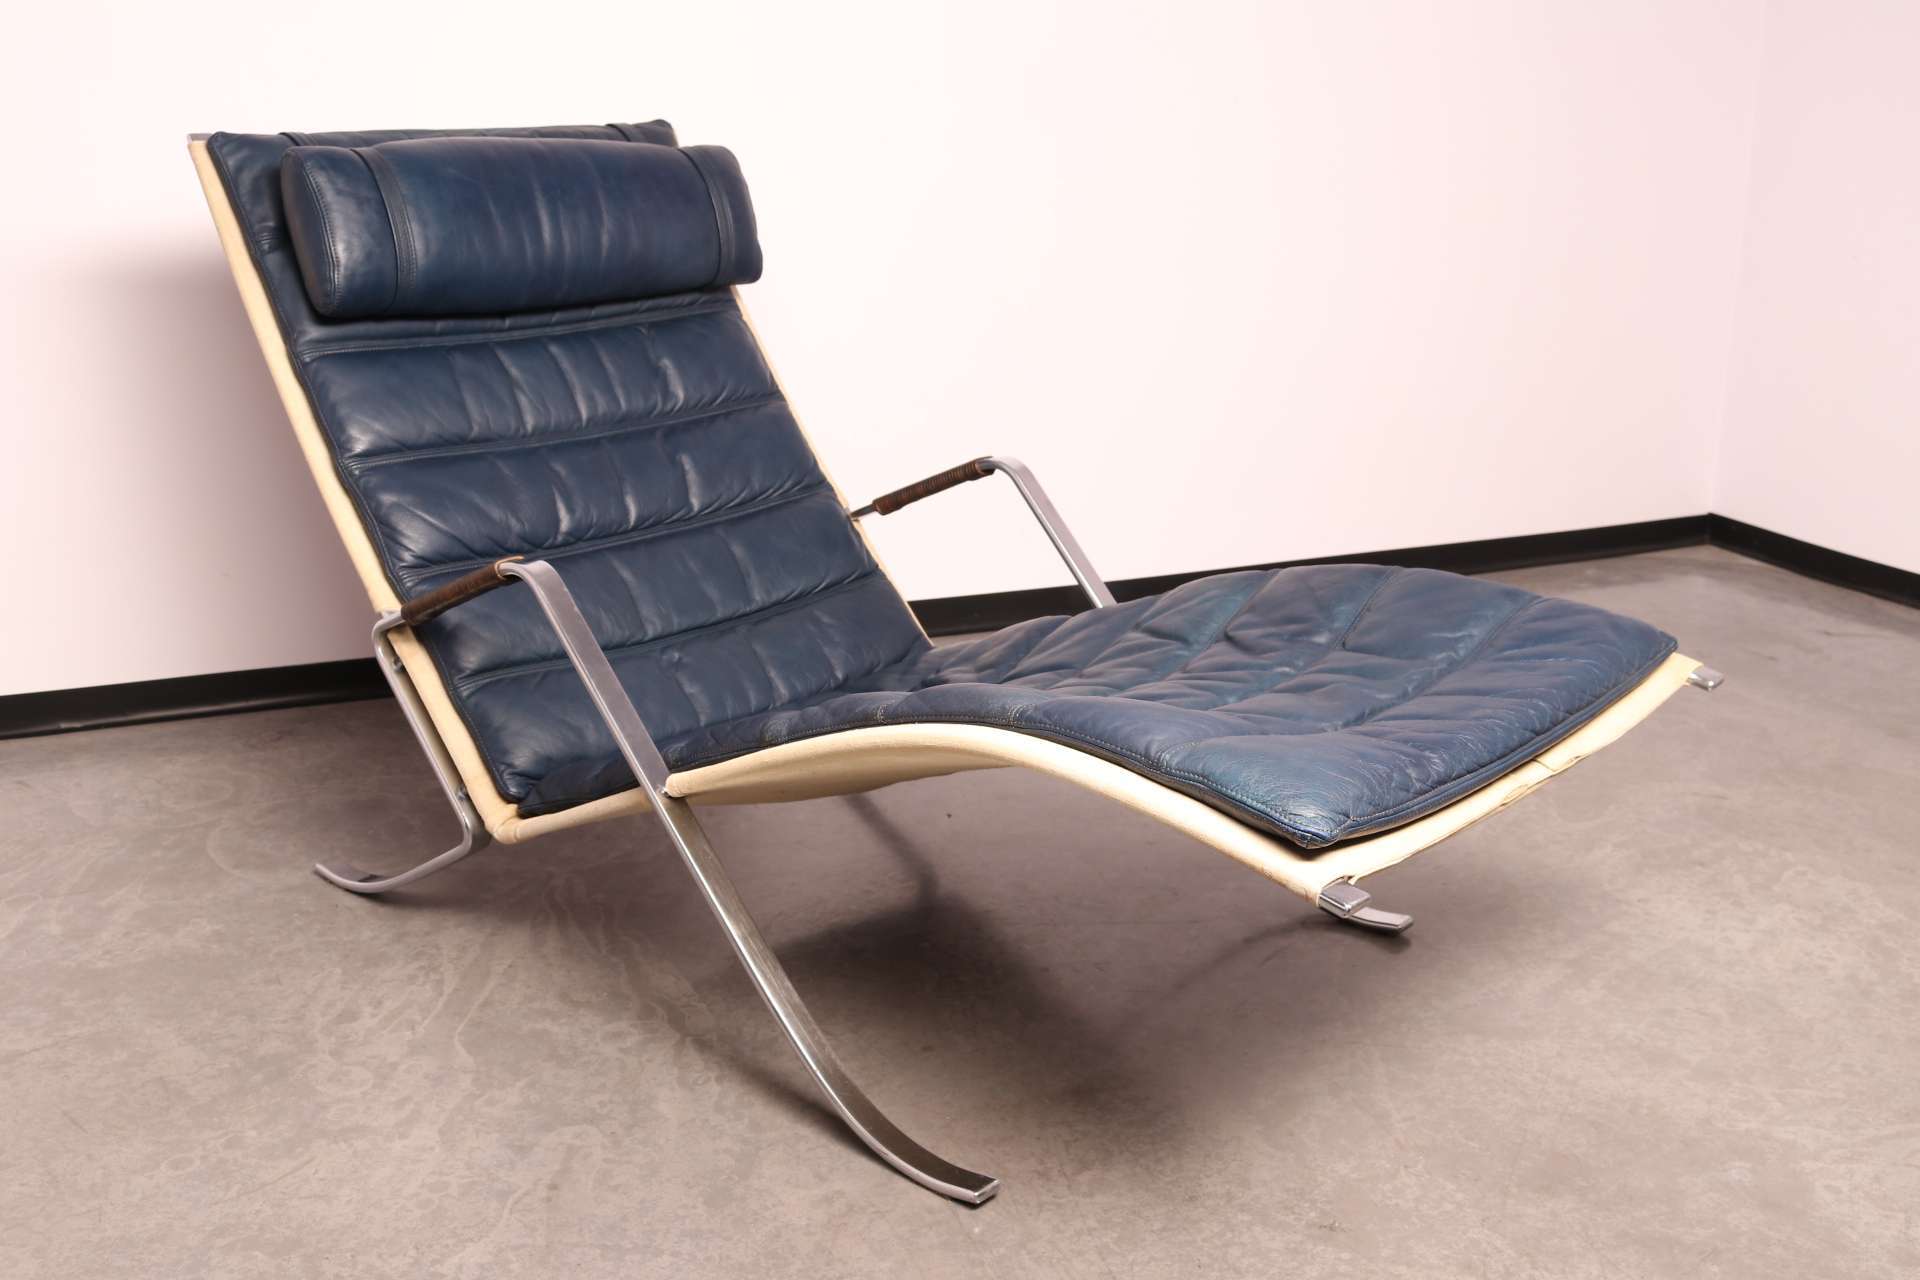 Grasshopper lounge chair vintage FK 87 Danish design iconic rare (7)